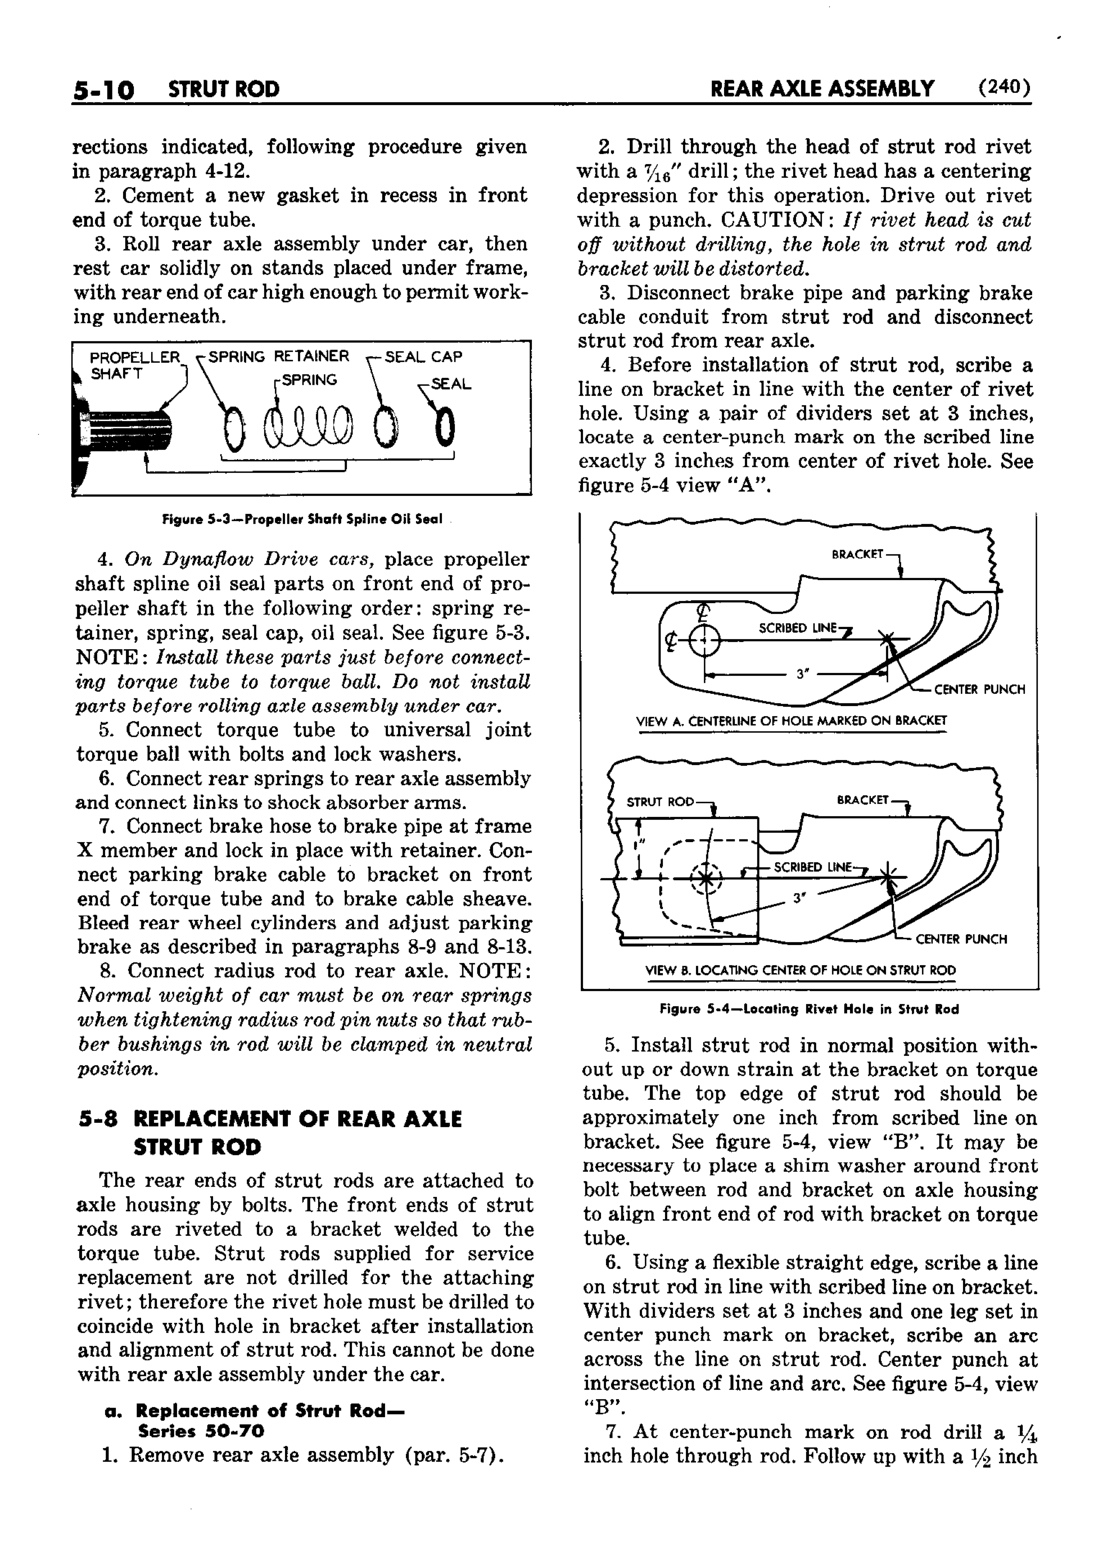 n_06 1952 Buick Shop Manual - Rear Axle-010-010.jpg